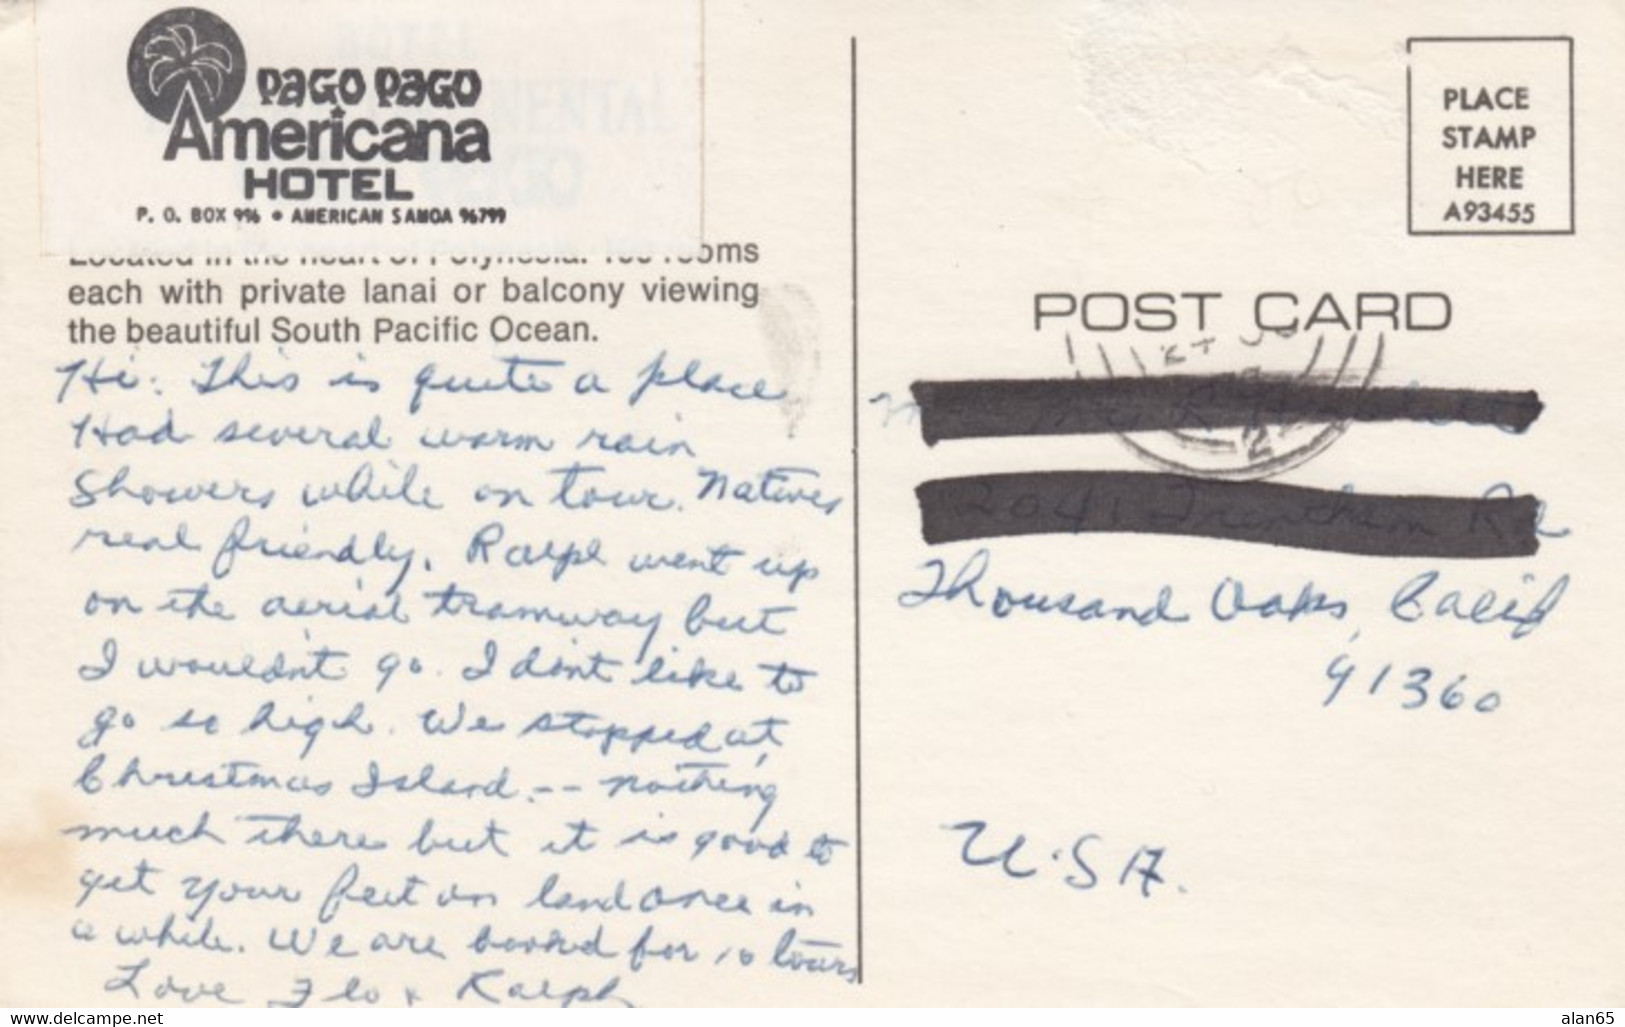 Pago Pago Samoa, Americana Hotel, View Of Harbor, Ship, C1960s/70s Vintage Postcard - Samoa